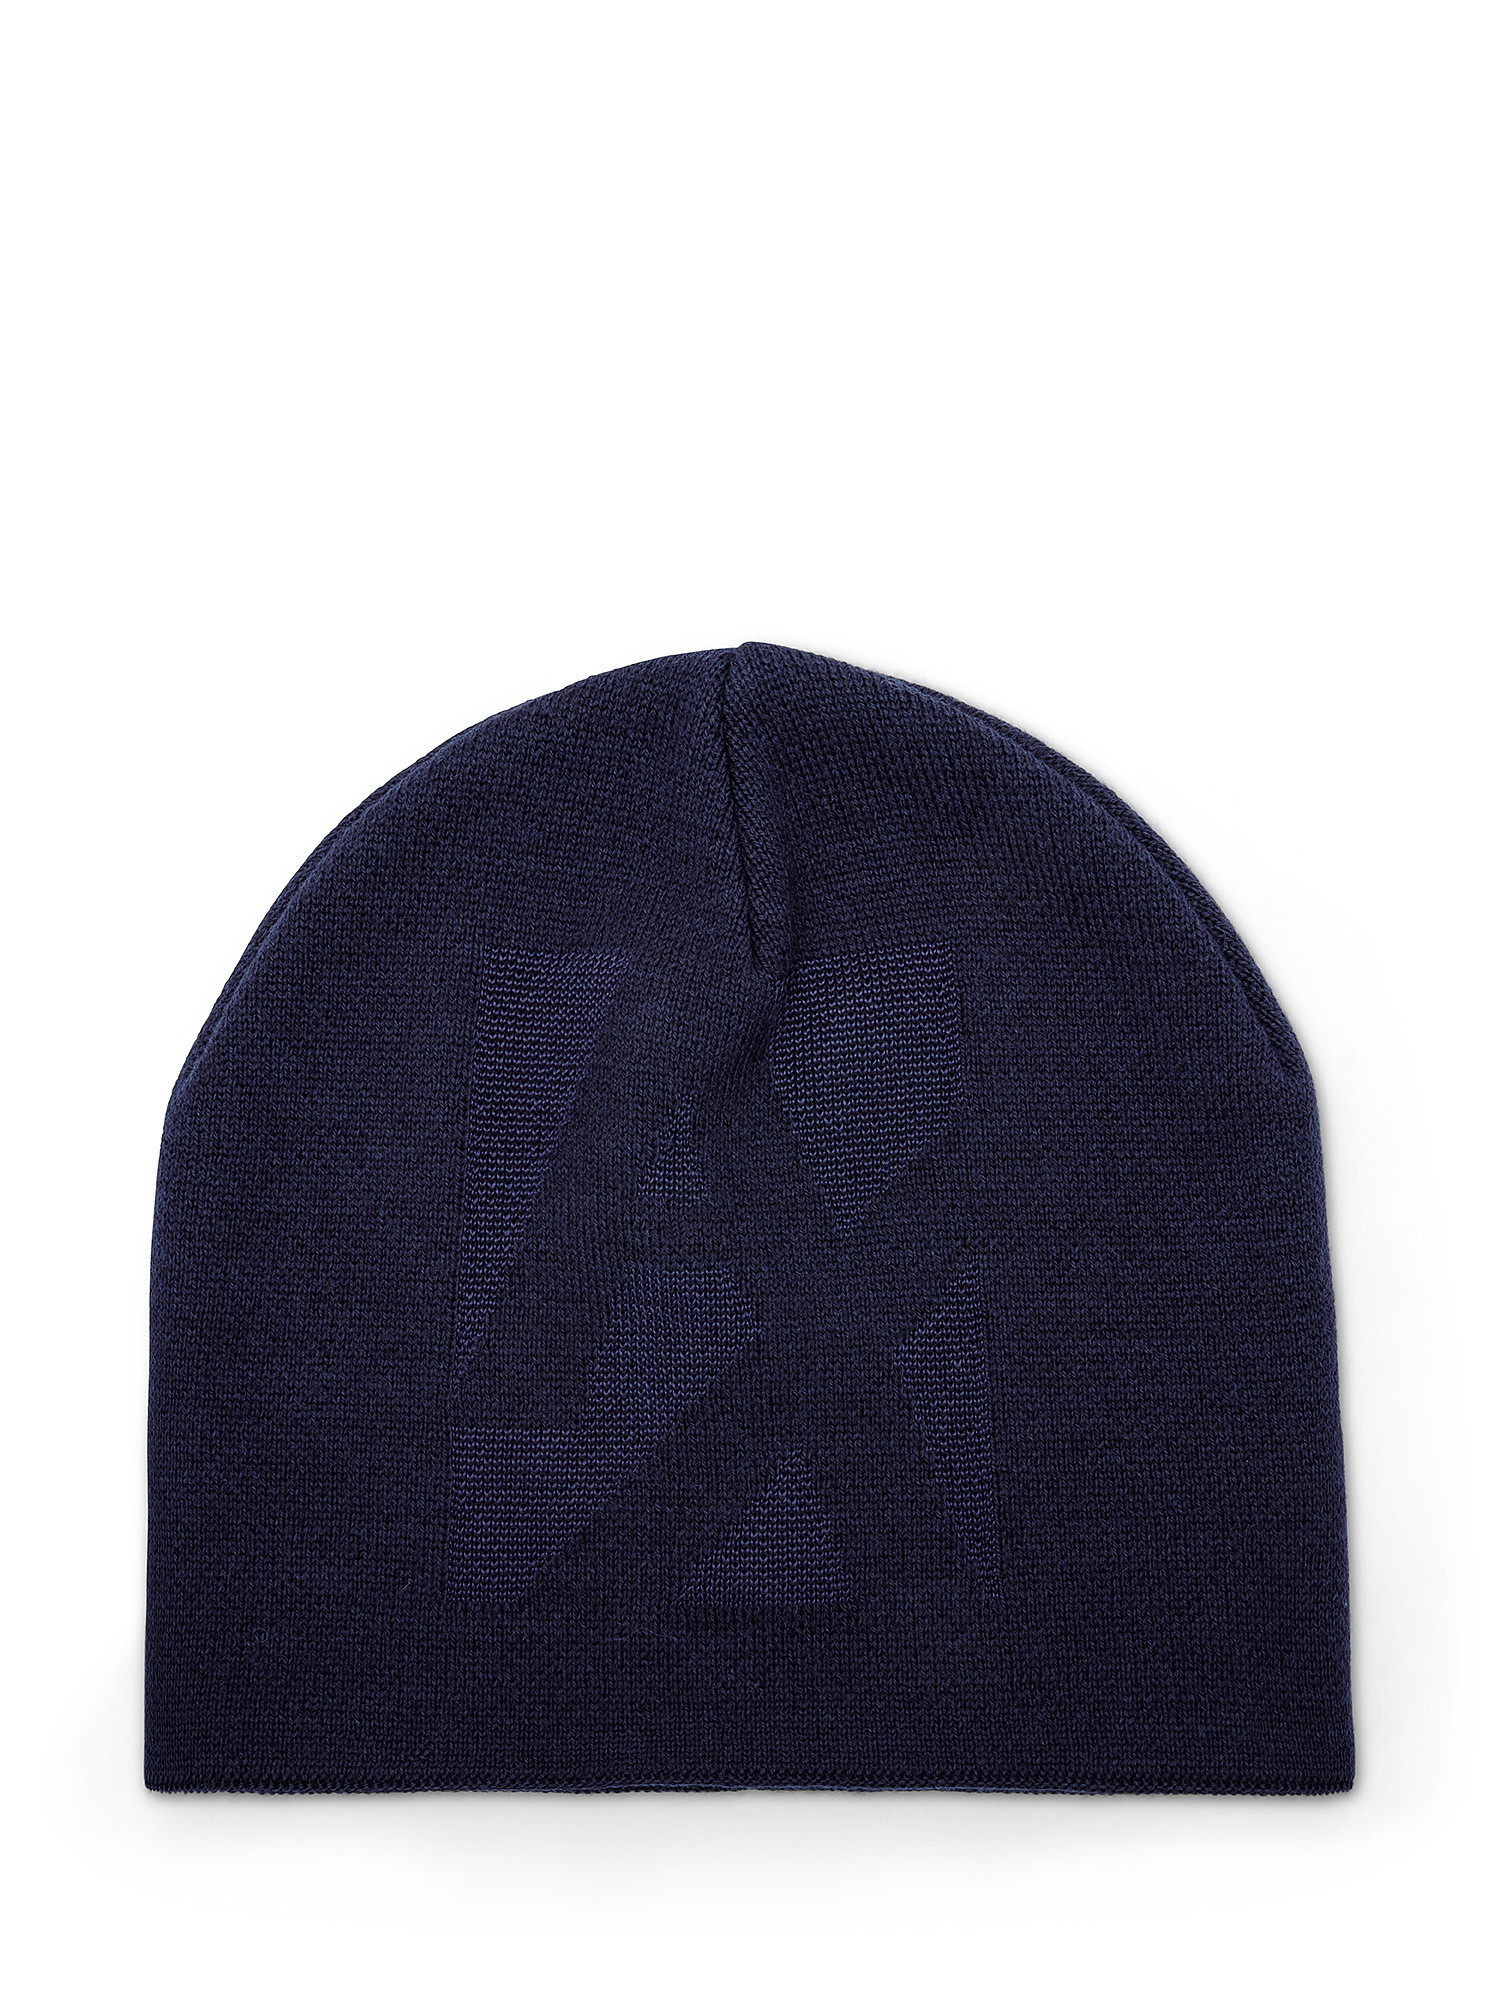 Armani Exchange - Cappello Beanie in misto lana con logo, Blu scuro, large image number 0